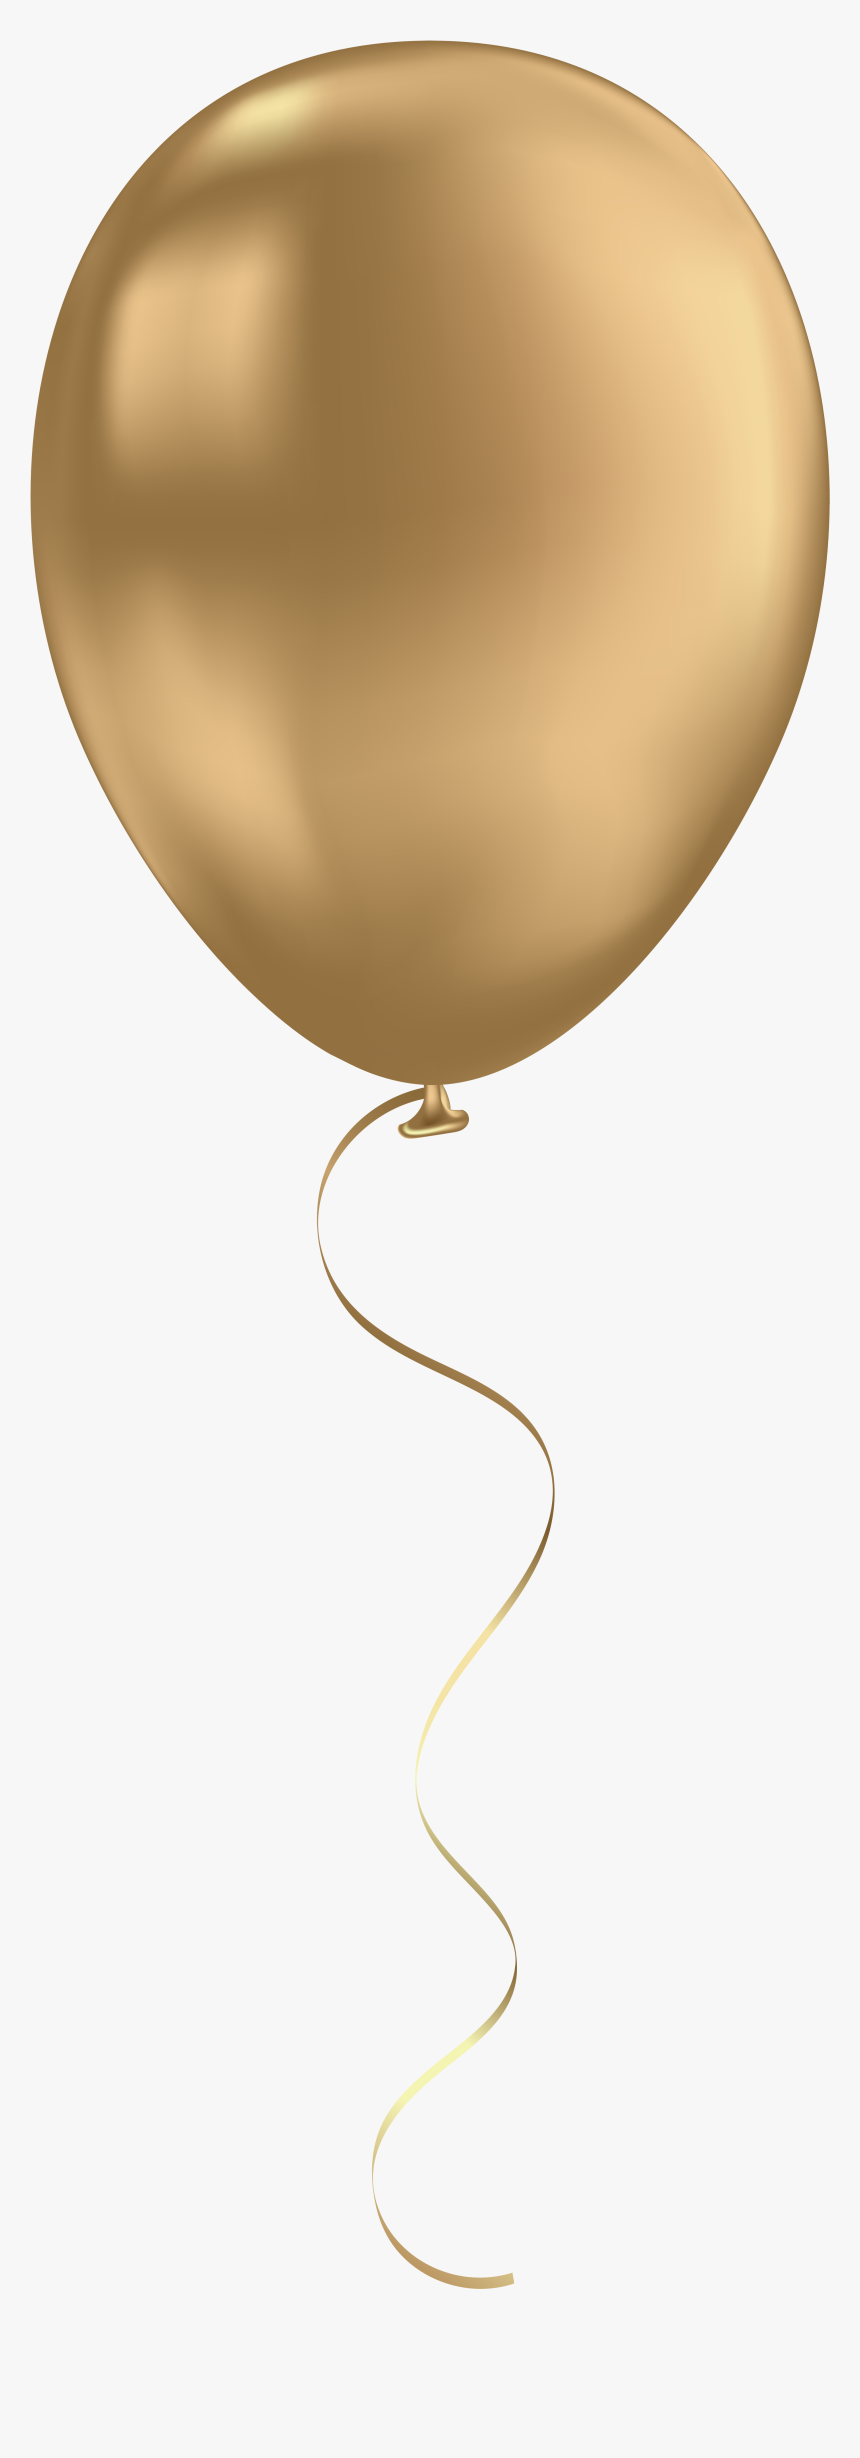 Png Balloon Gold Transparent, Png Download - kindpng